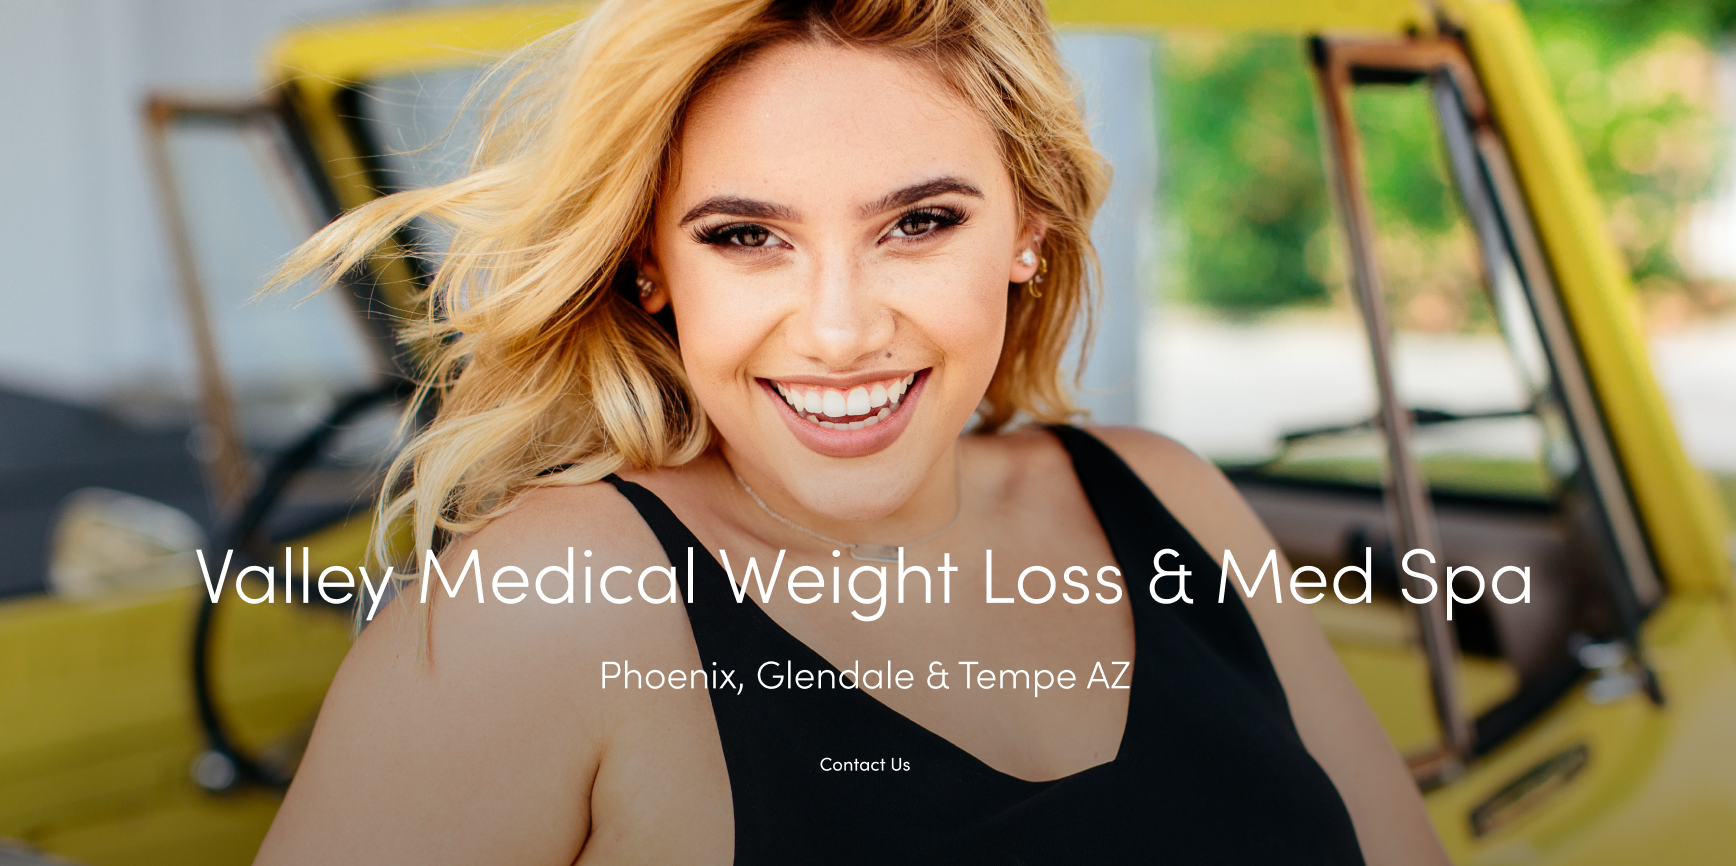 Valley Medical Weight Loss Serving Phoenix, Glendale, & Tempe, AZ